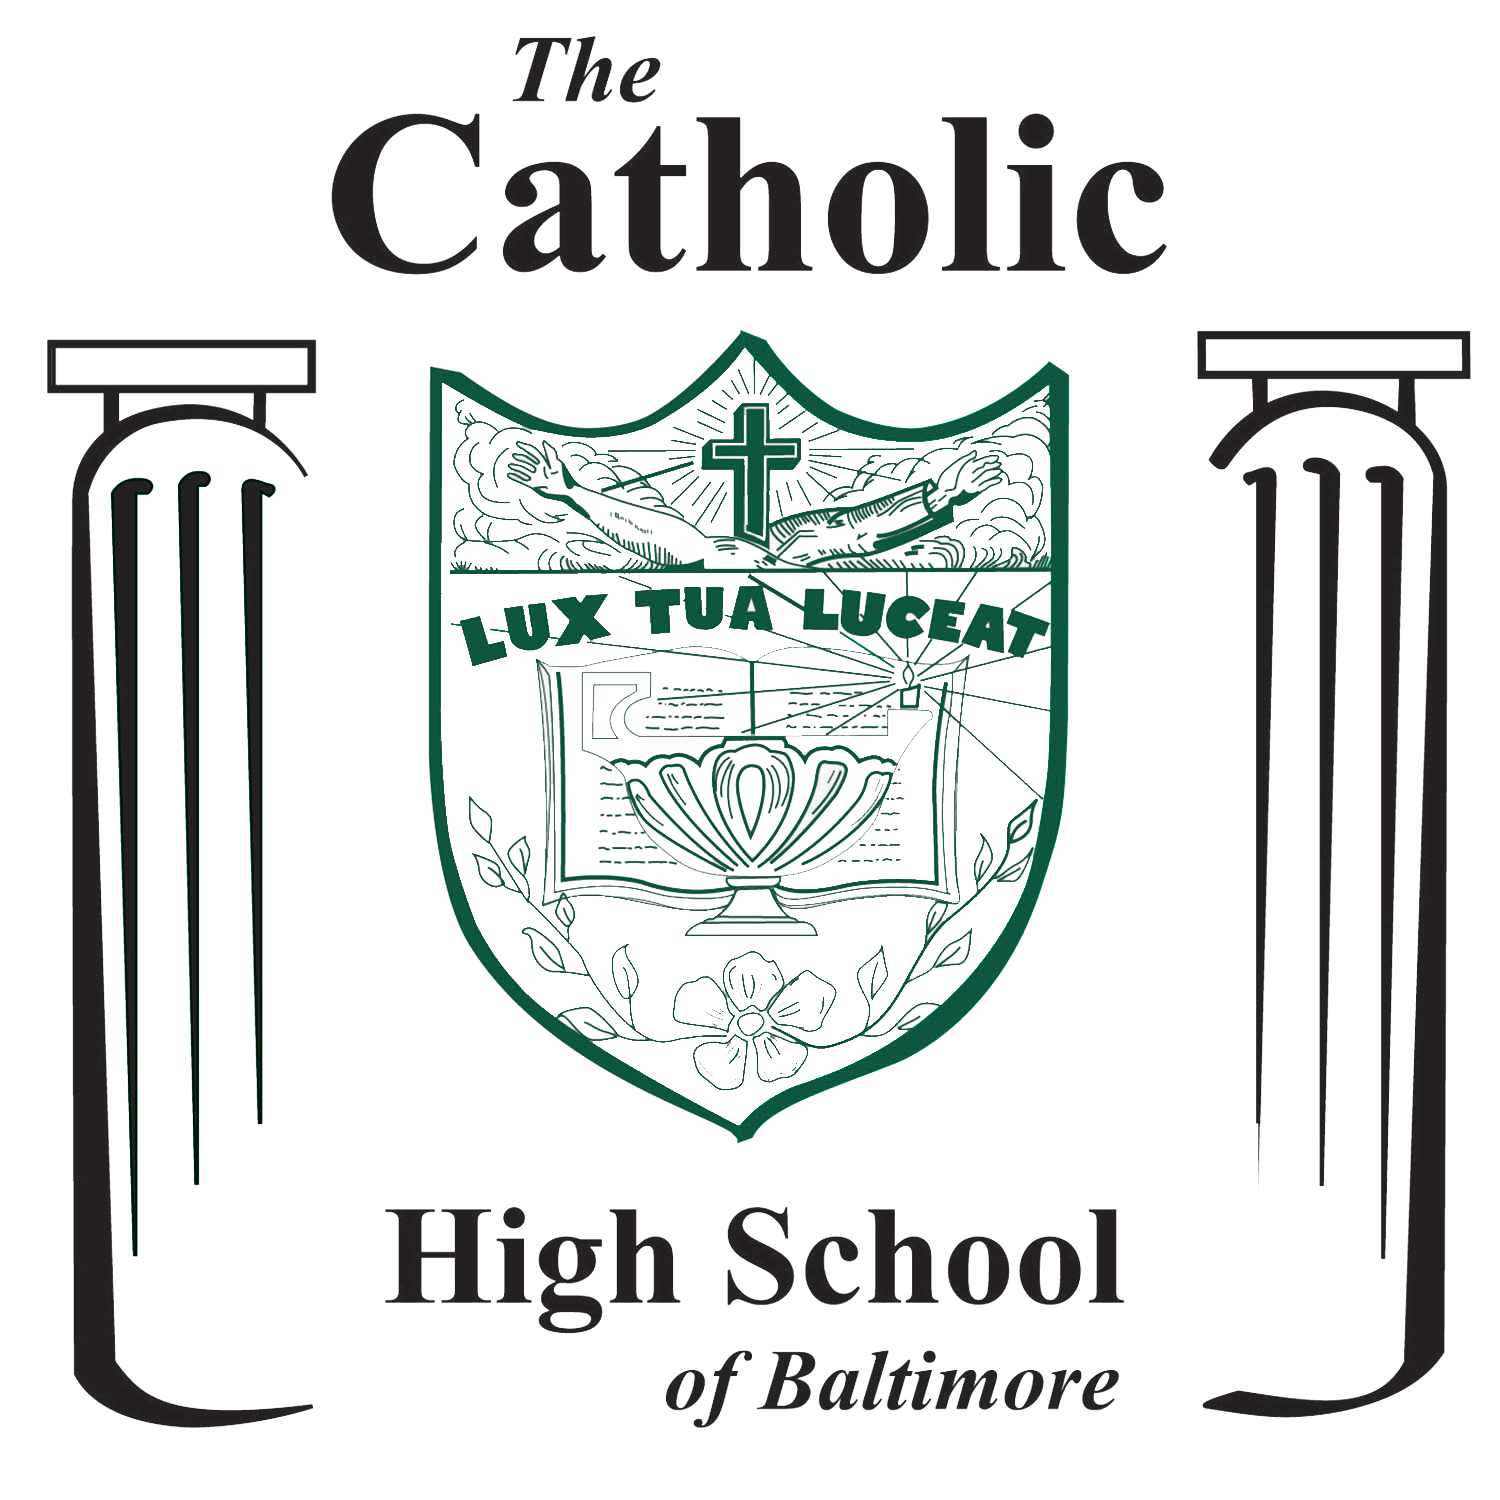 The Catholic High School of Baltimore logo